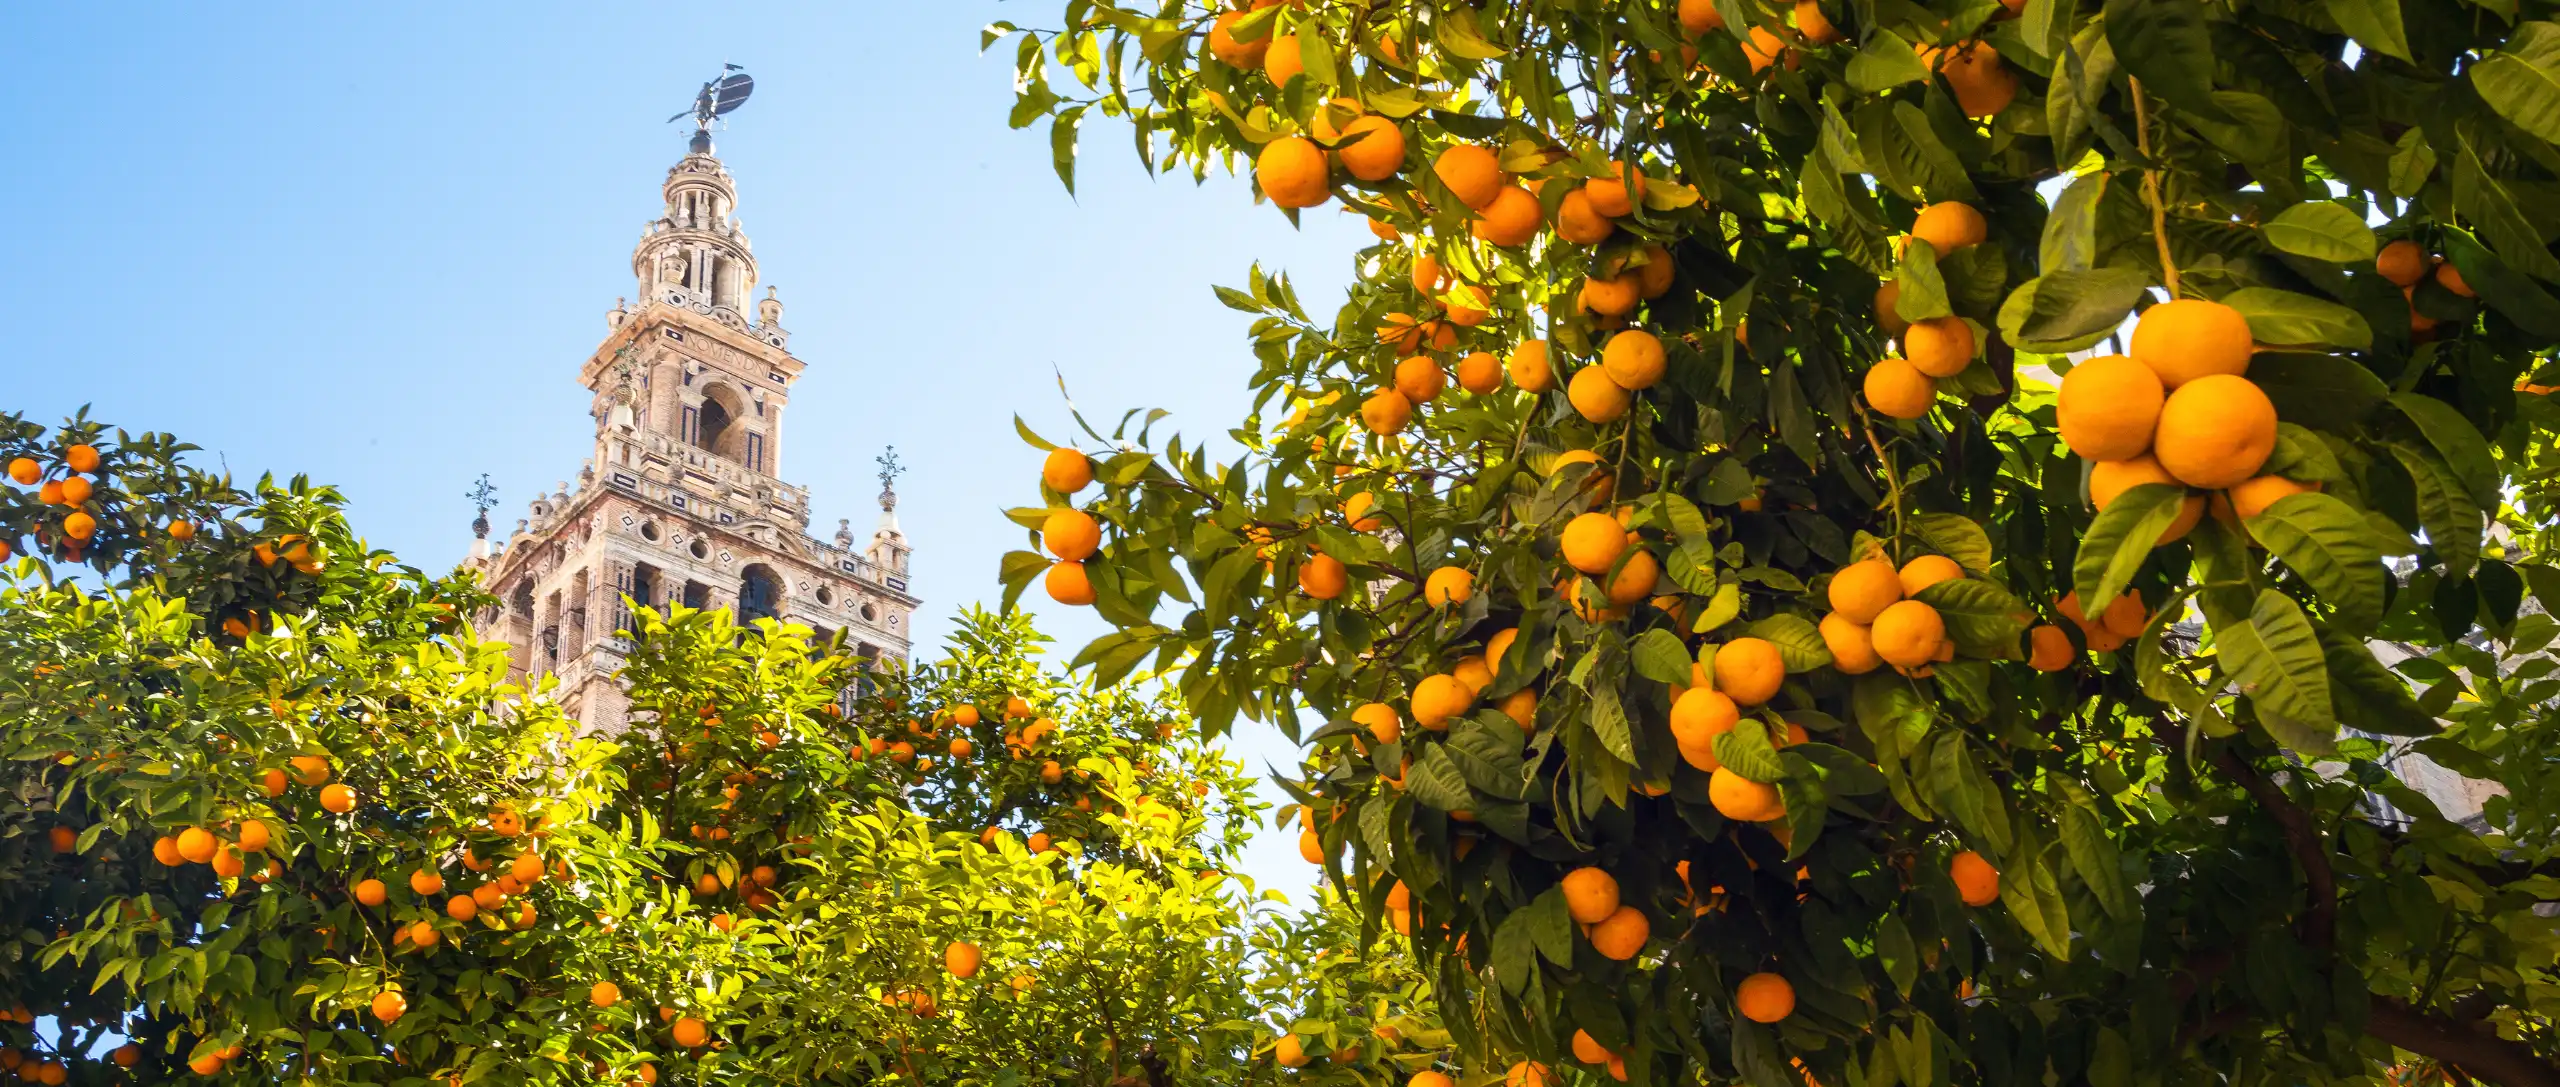 Detalle de la Giralda en Sevilla rodeada de naranjos